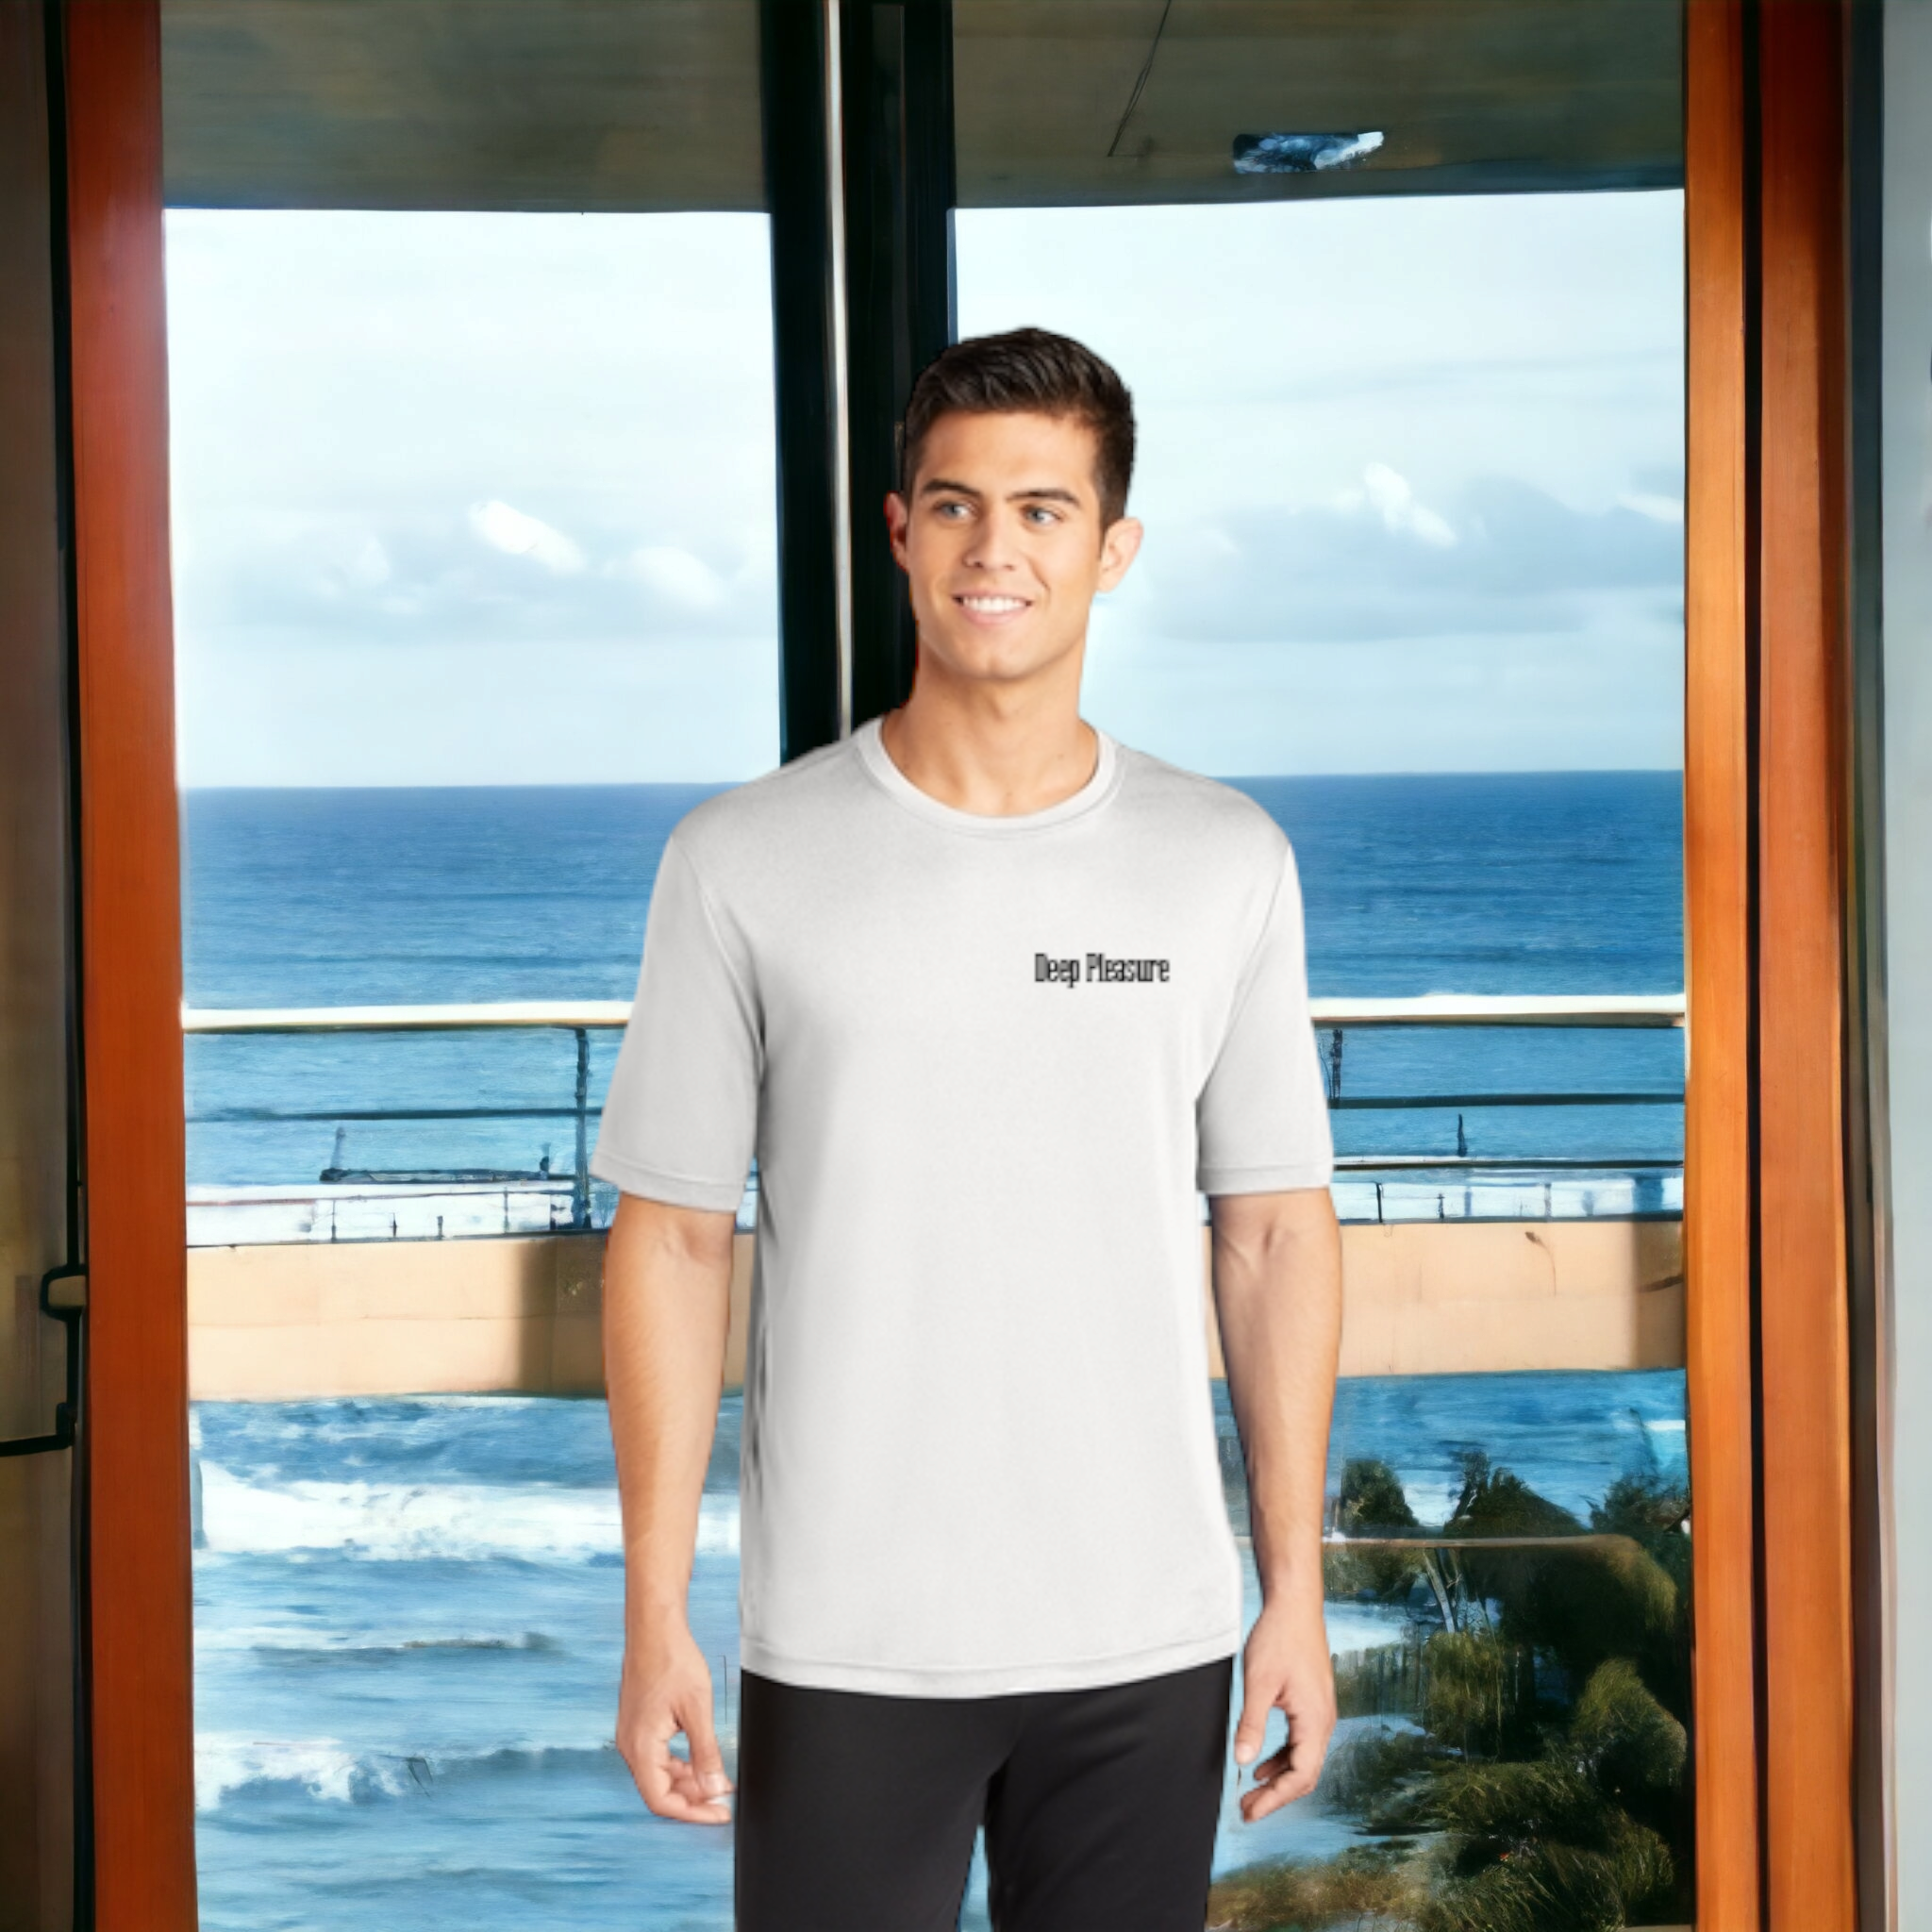 Dri-Fit Custom Boat Shirts - Long Sleeve: Customized Apparel for Boaters –  LuLu Grace